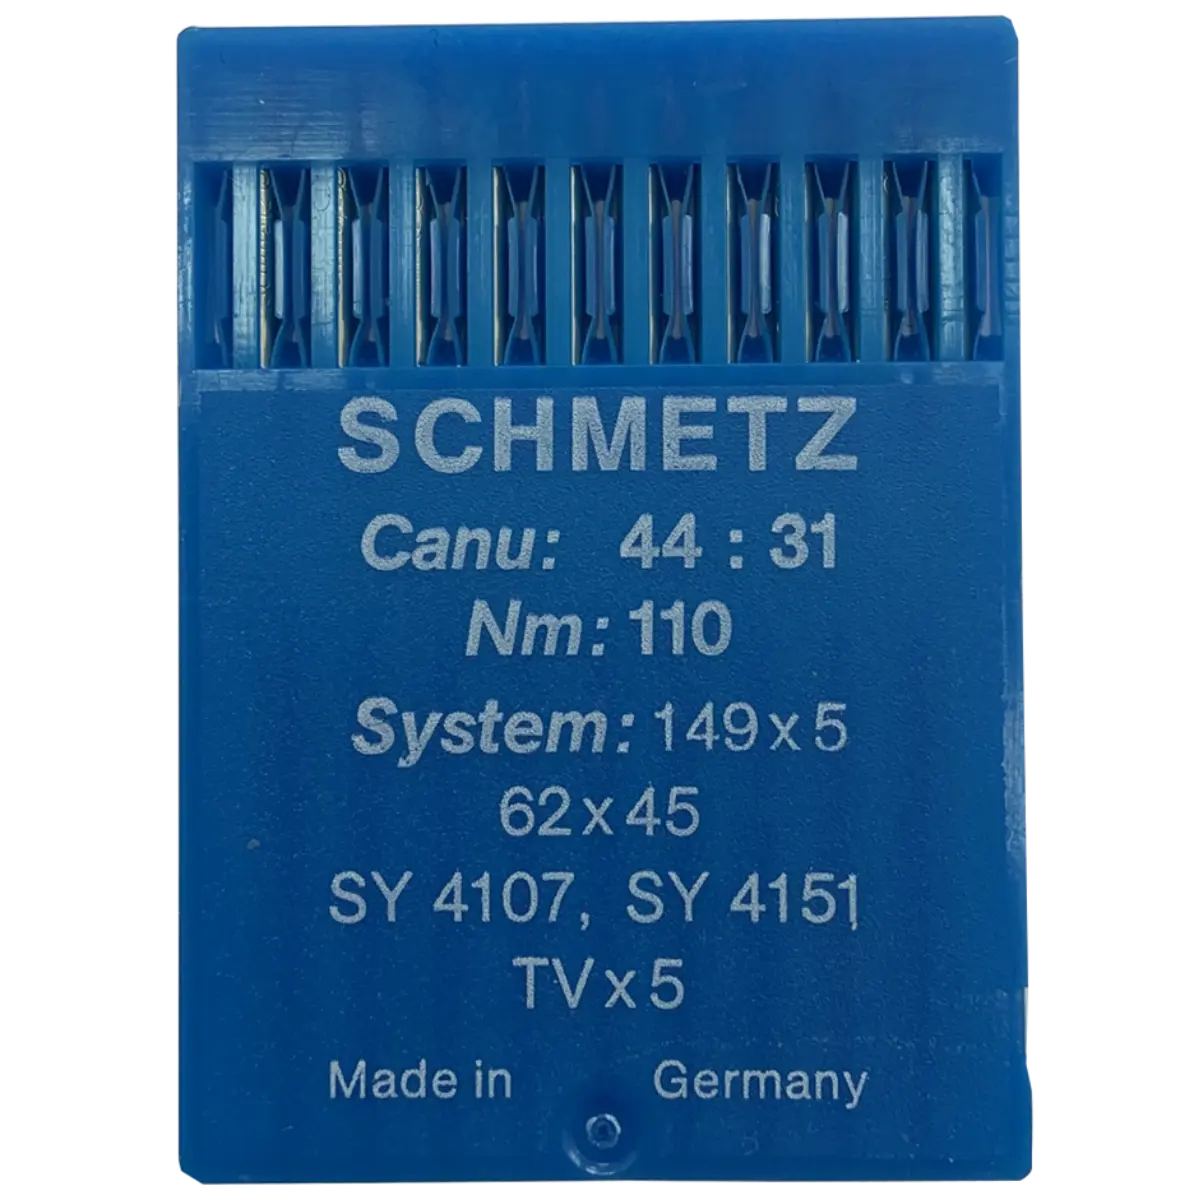 Schmetz Industrial Needles 149x5, SY 4107, SY 4151,TVx5, 62x45, Canu: 44 : 31